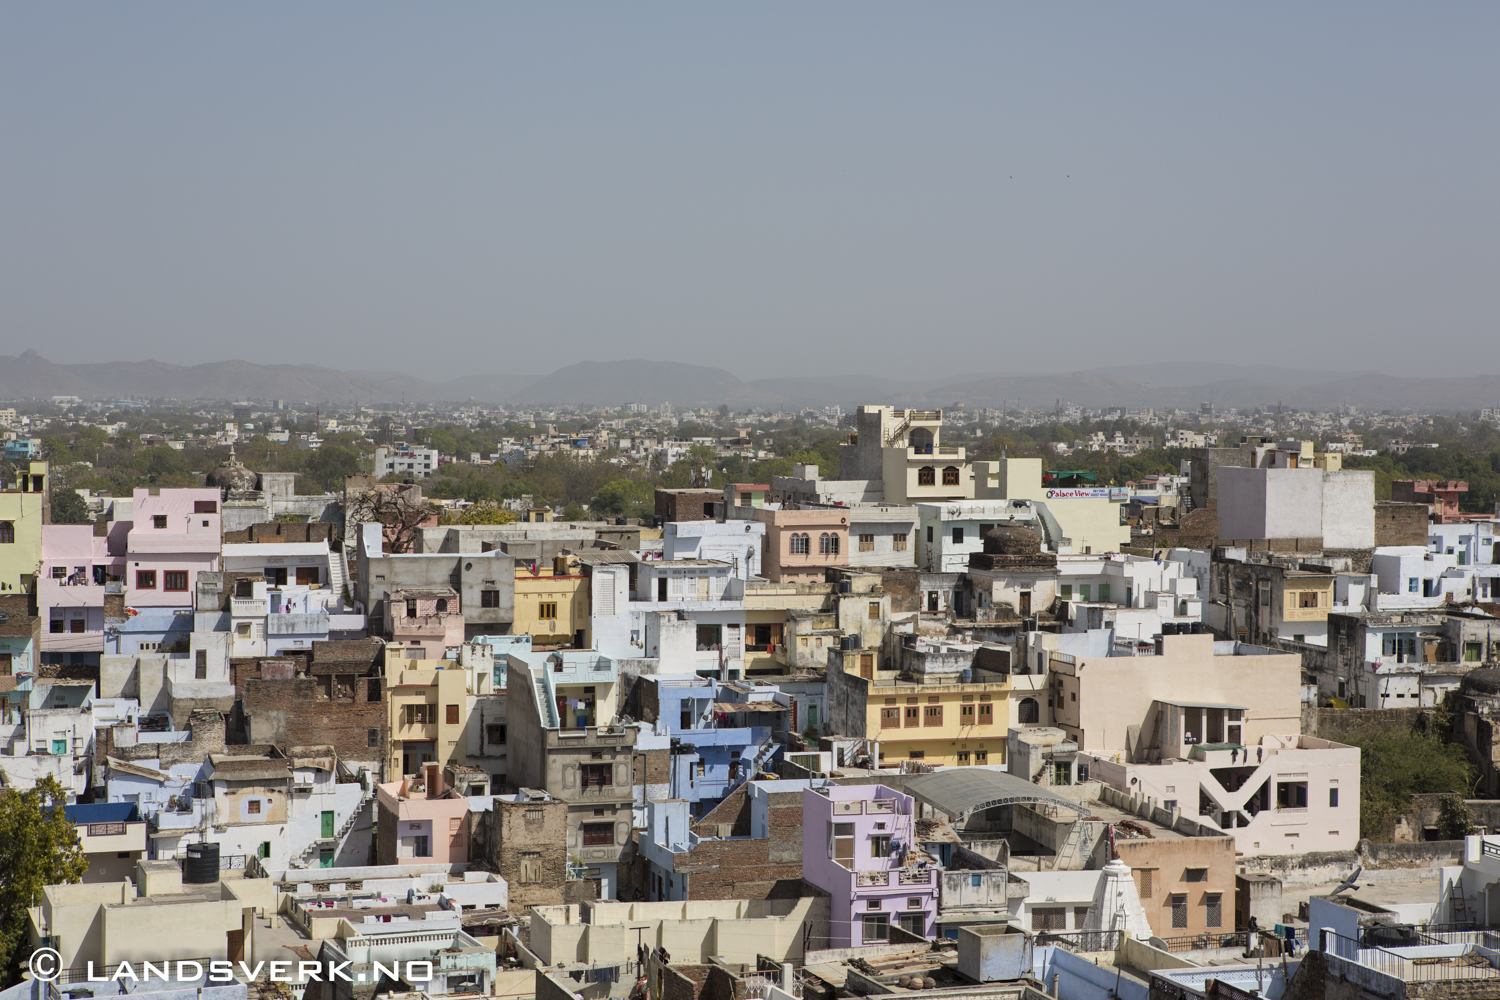 Udaipur, India. 

(Canon EOS 5D Mark III / Canon EF 24-70mm 
f/2.8 L USM)